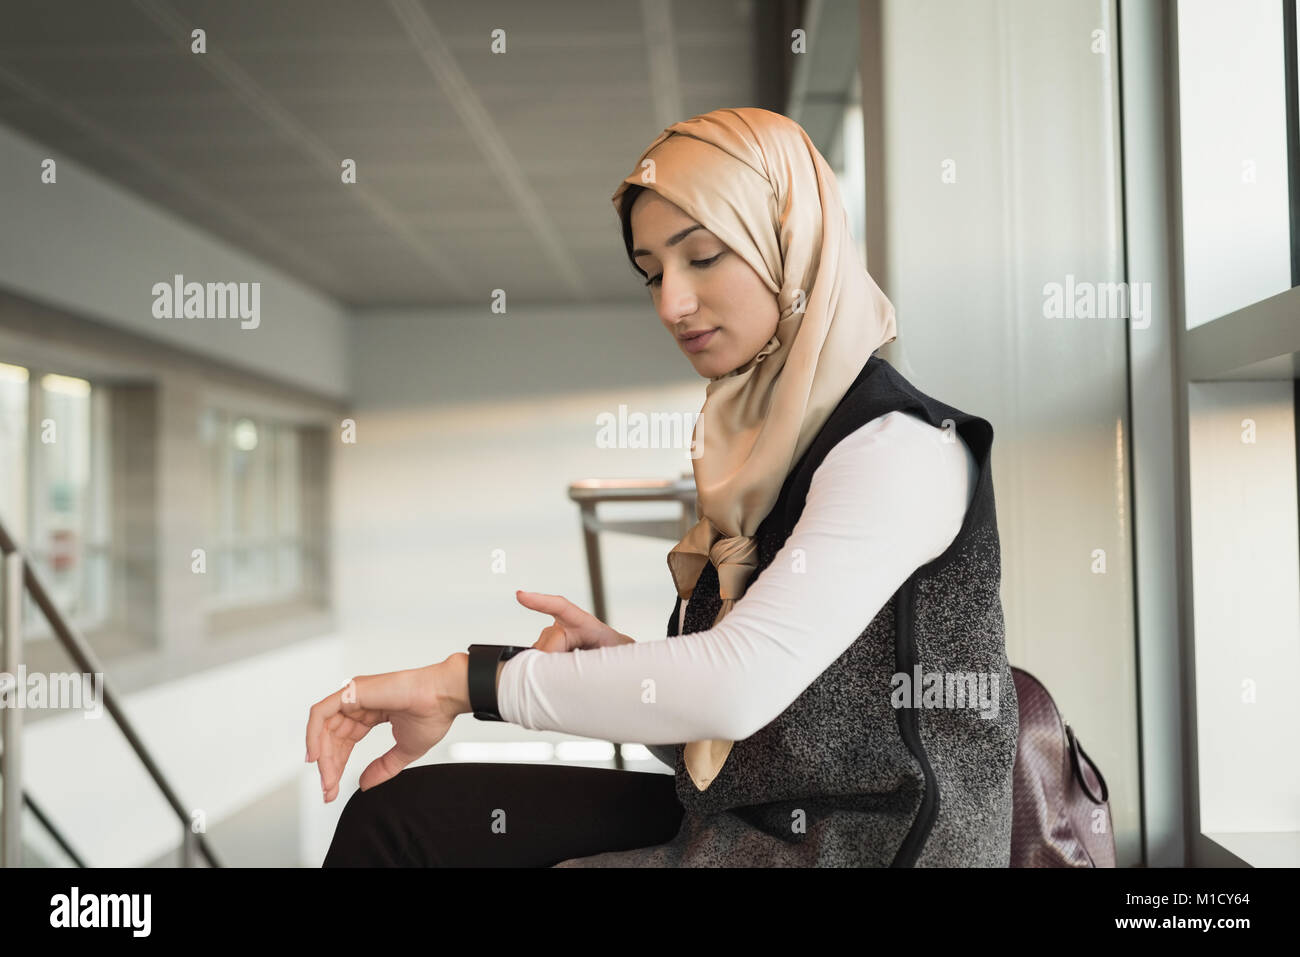 Woman in hijab using smartwatch Stock Photo